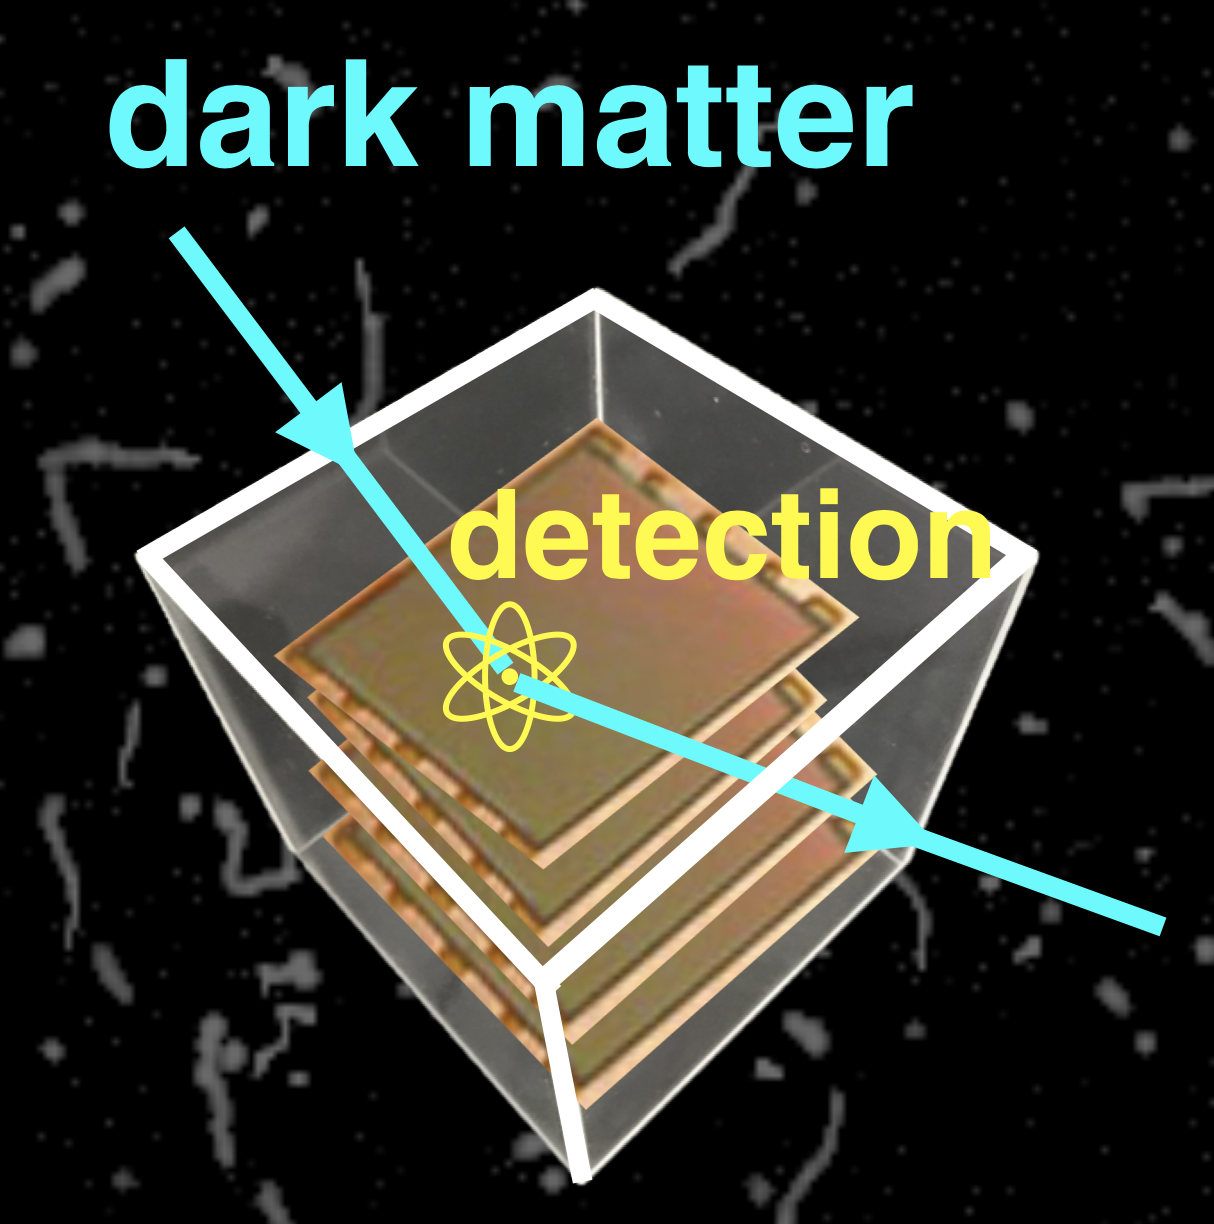 Dark matter detection